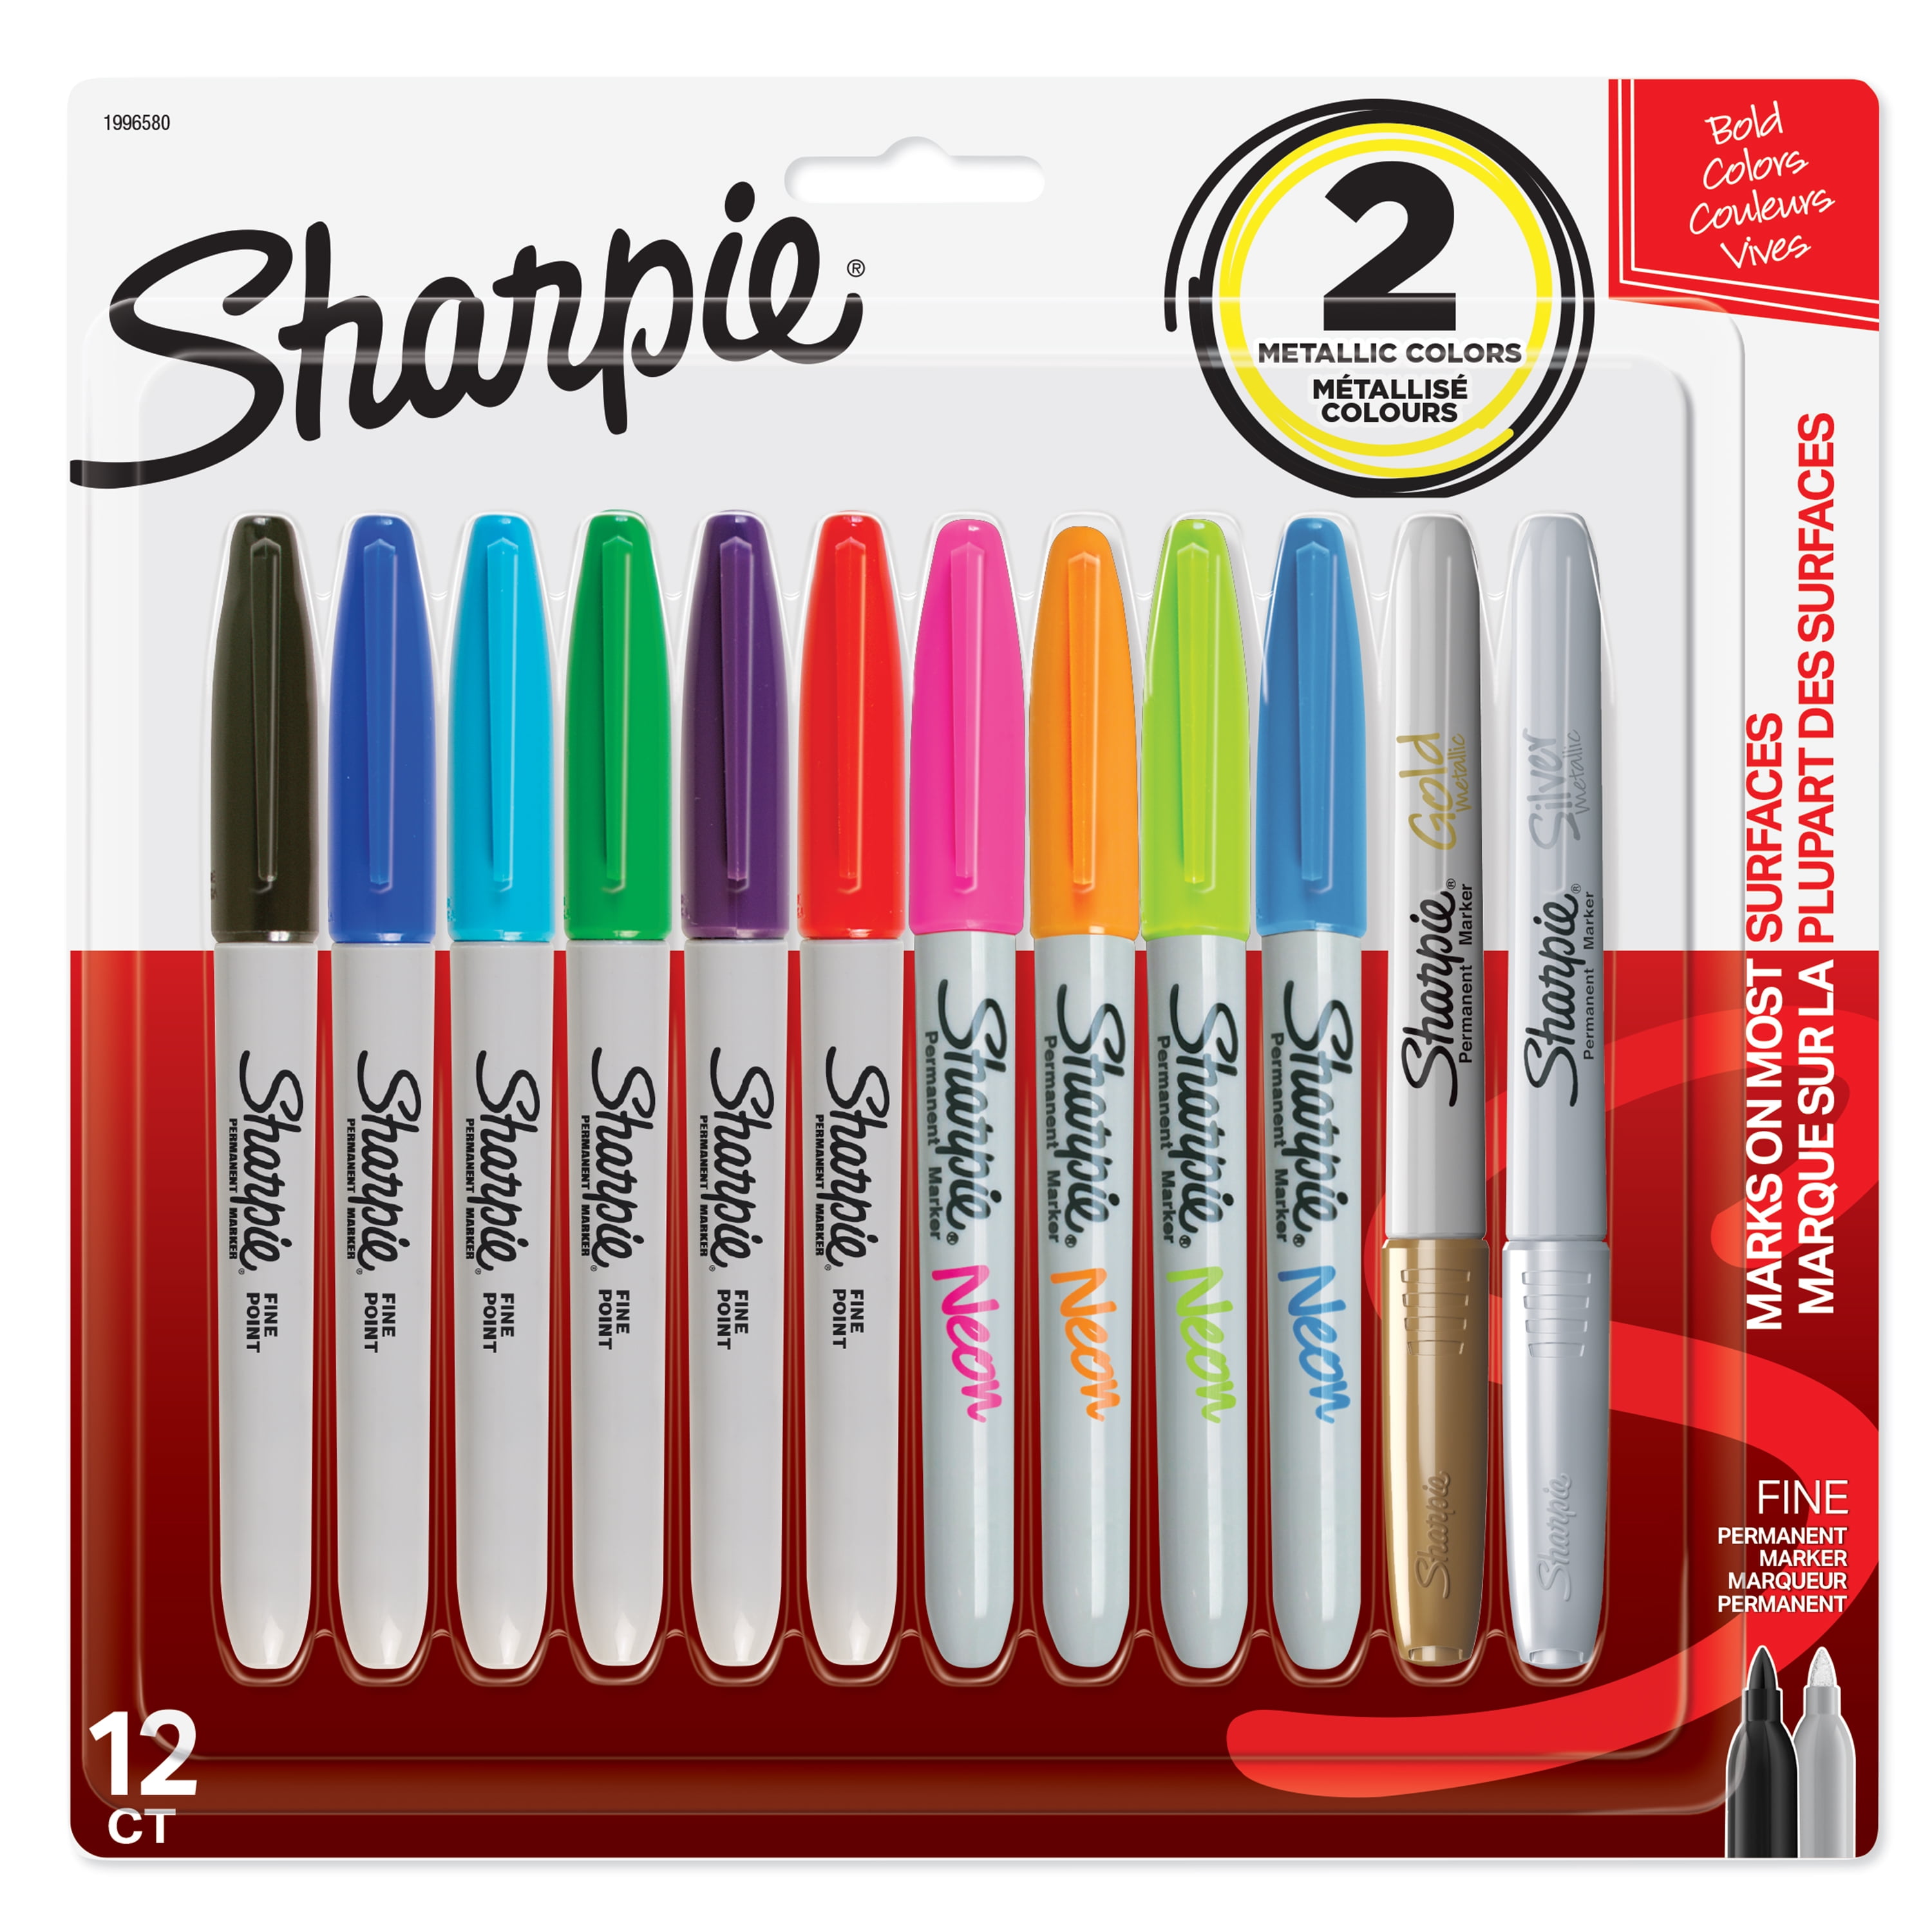 Sharpie Pen Style Permanent Marker for sale online 